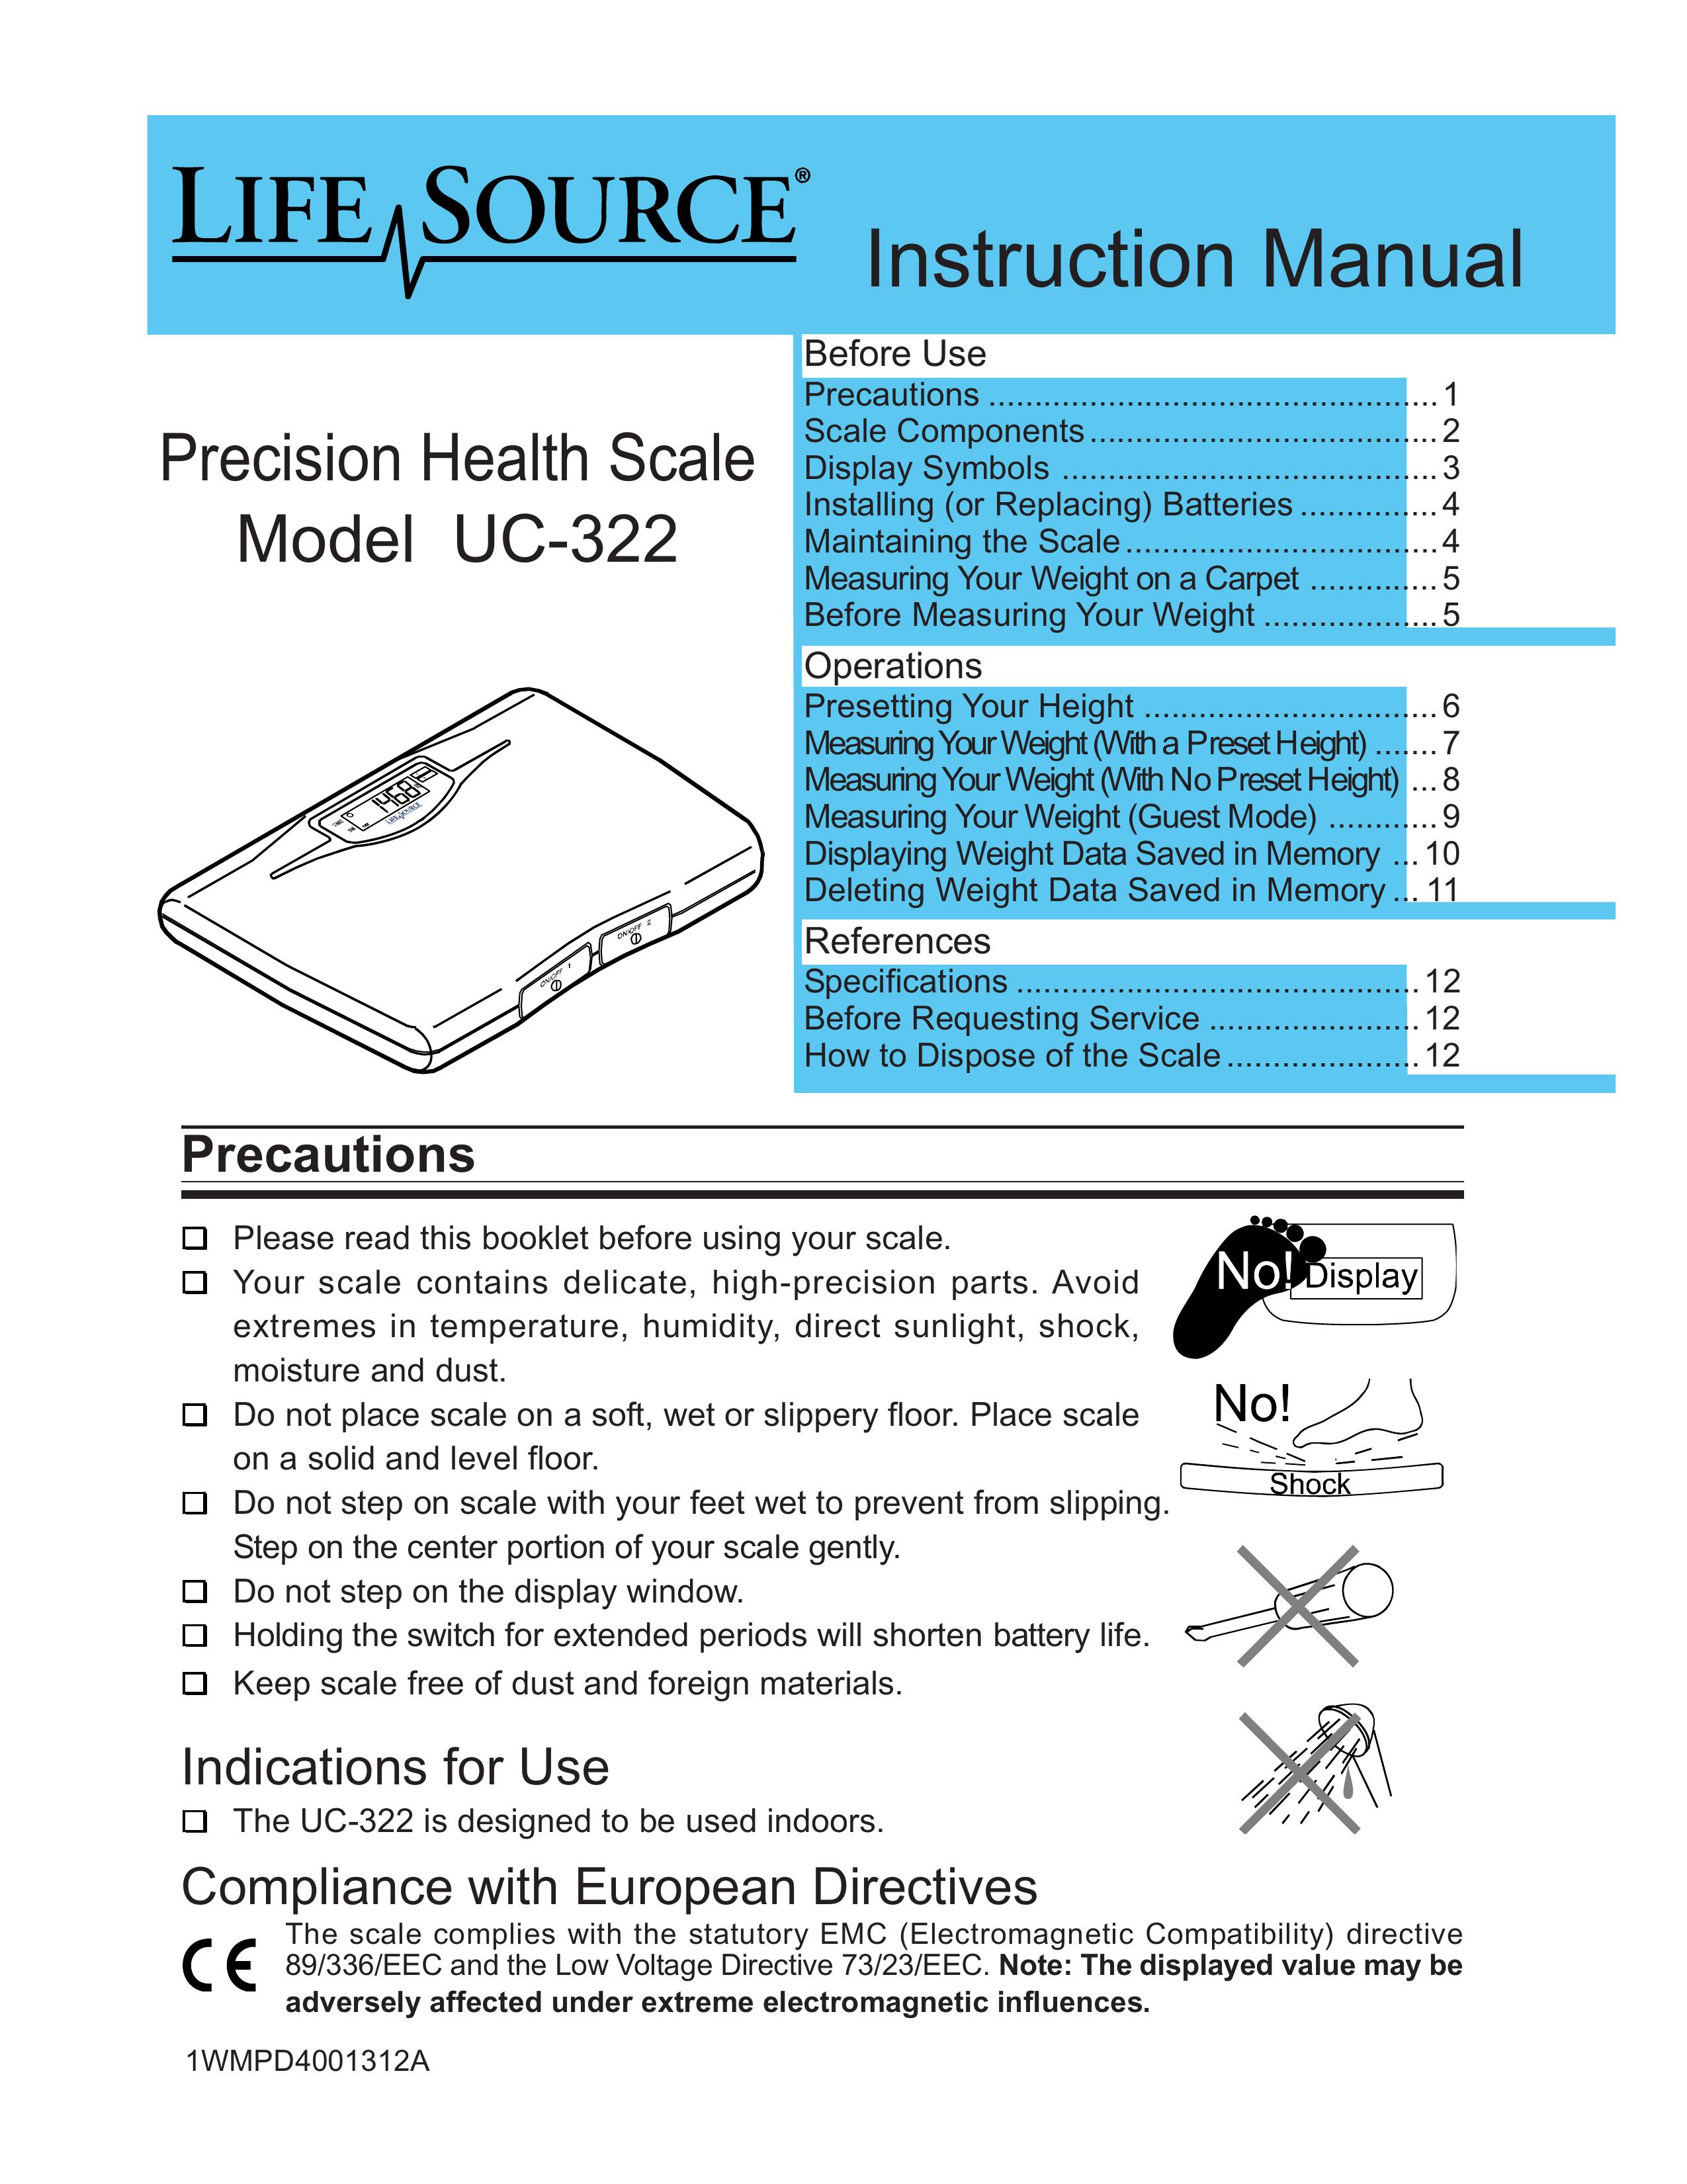 LifeSource UC-322 Scale User Manual